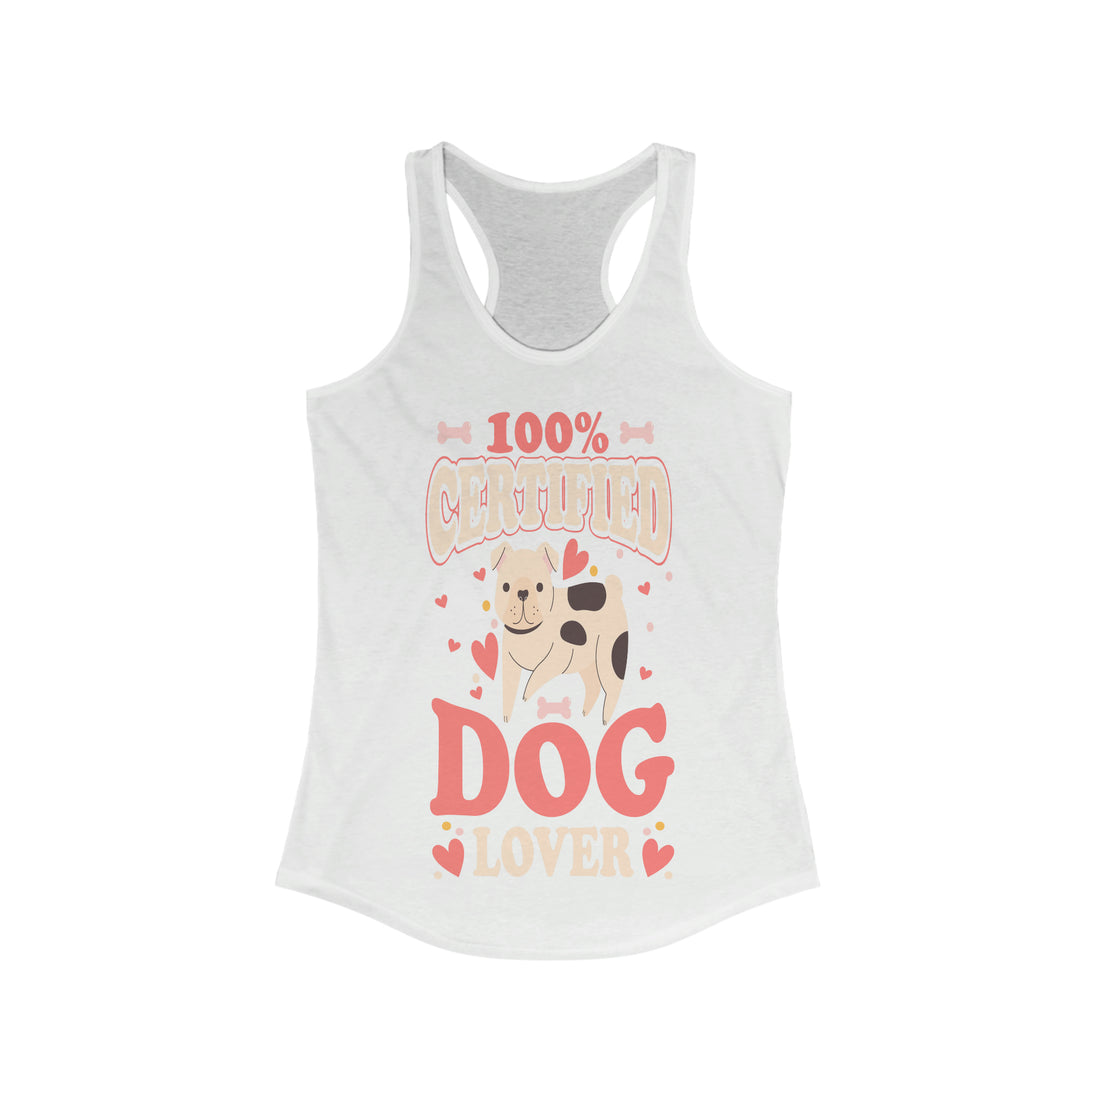 100% Certified Dog Lover - Racerback Tank Top